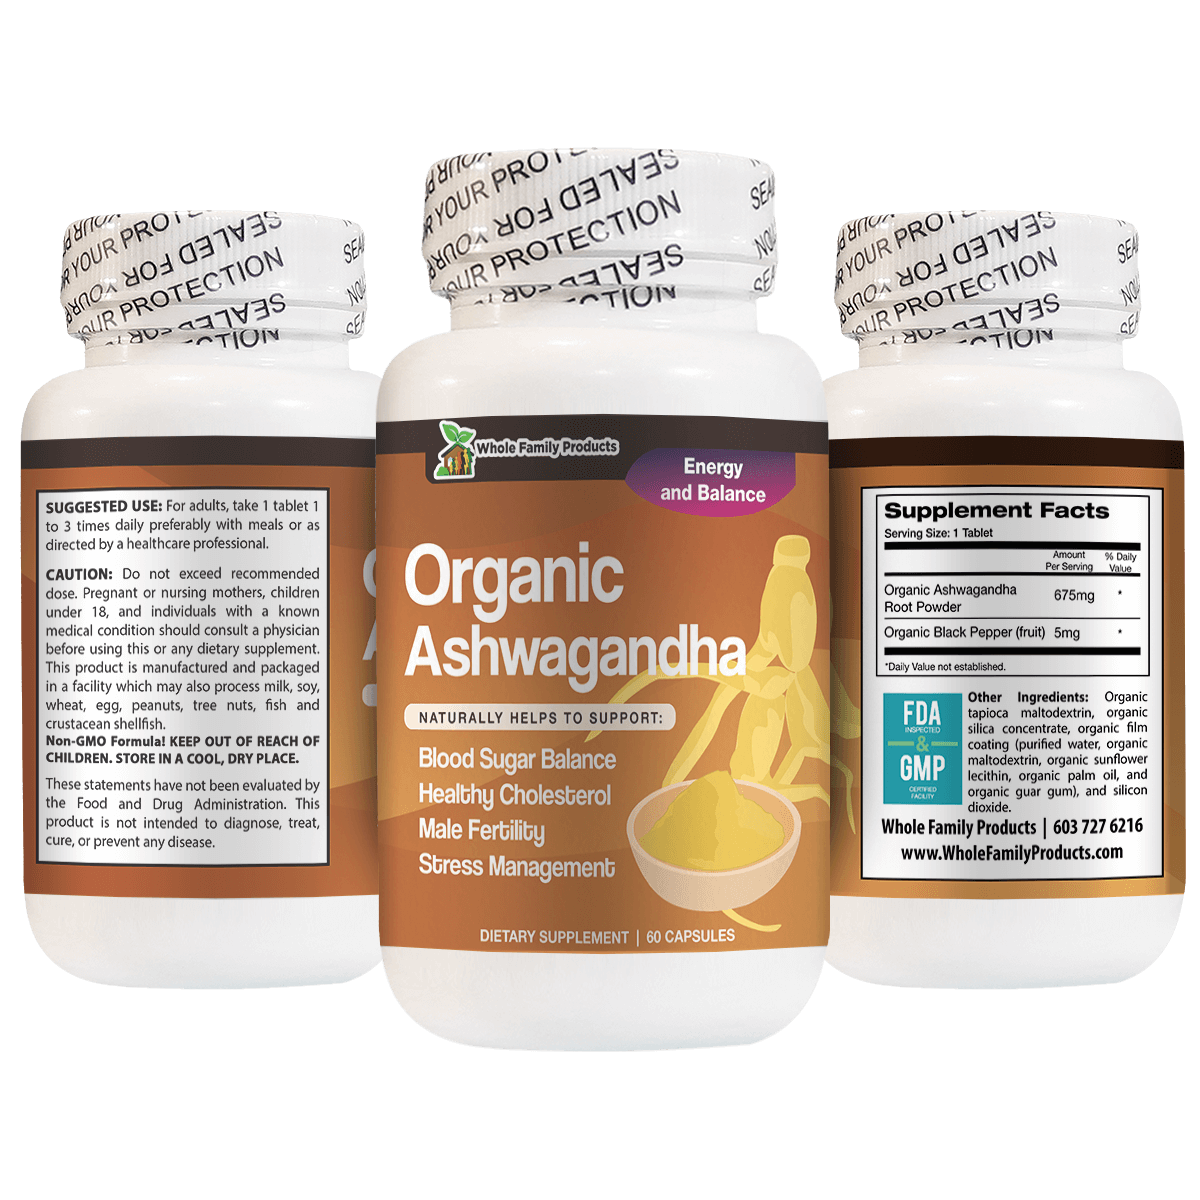 Organic Ashwagandha Natural Helps To Support Blood Sugar Balance and Stress Management